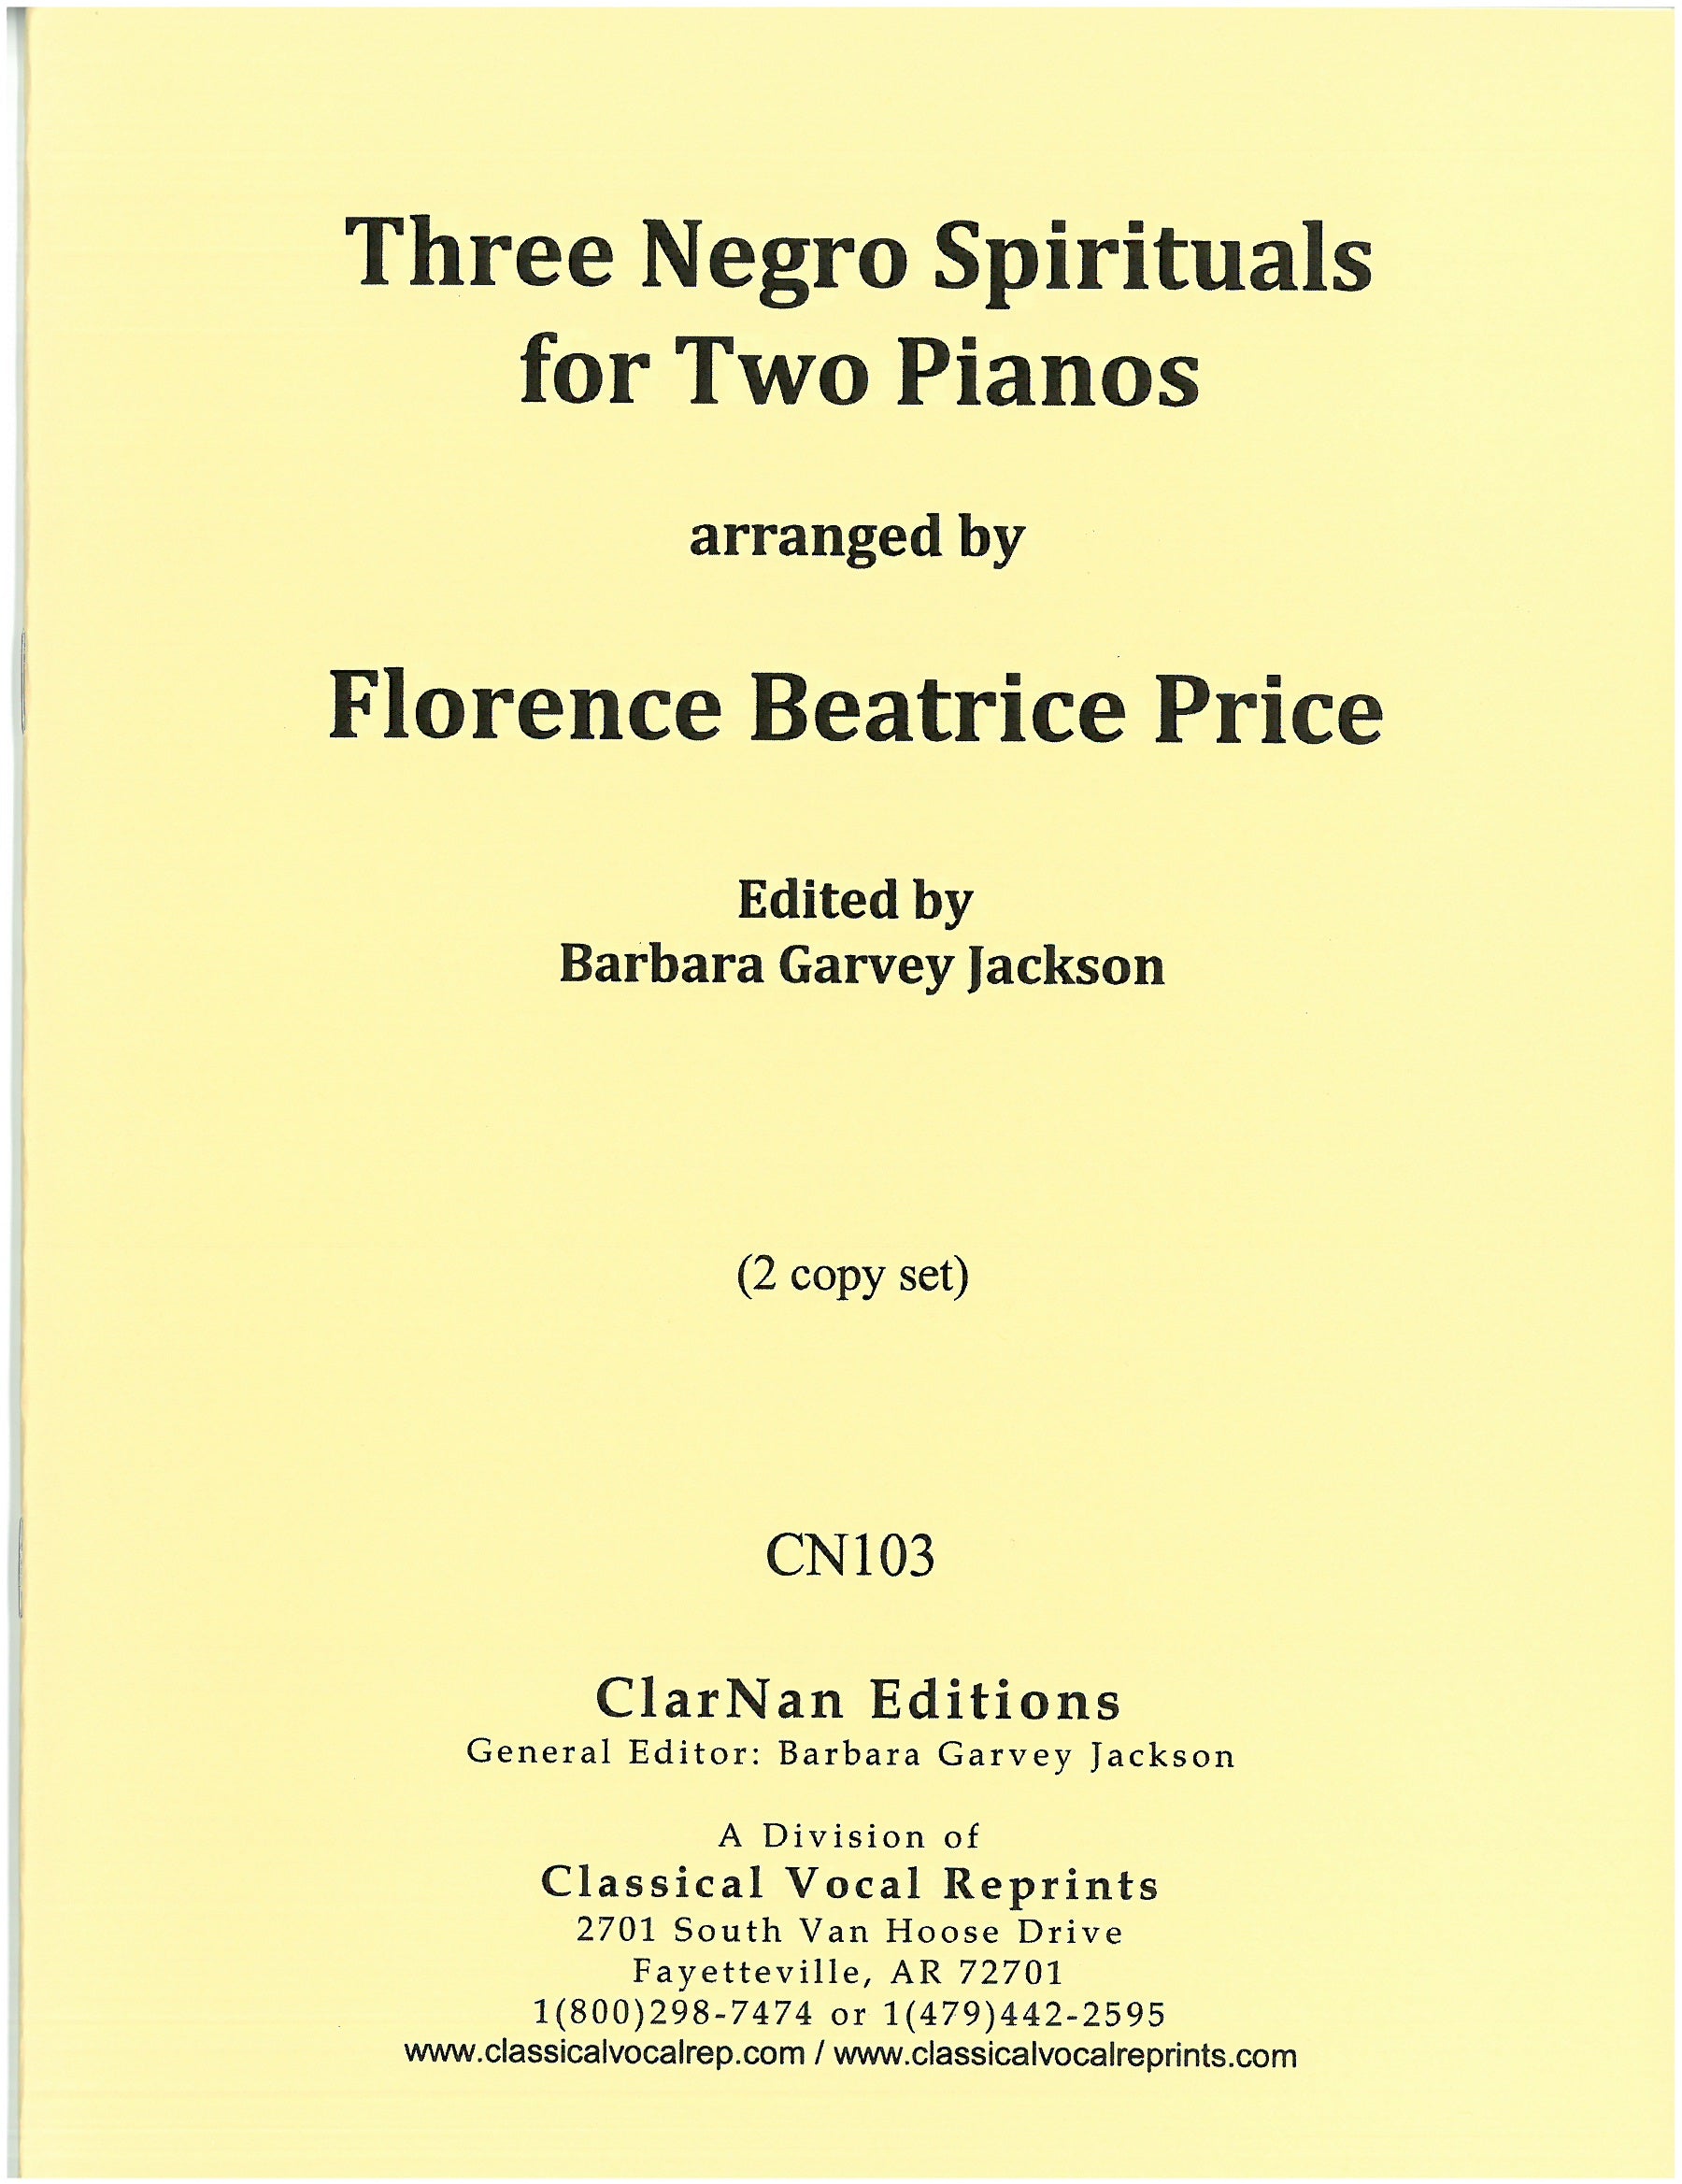 Price: Three Negro Spirituals for Two Pianos